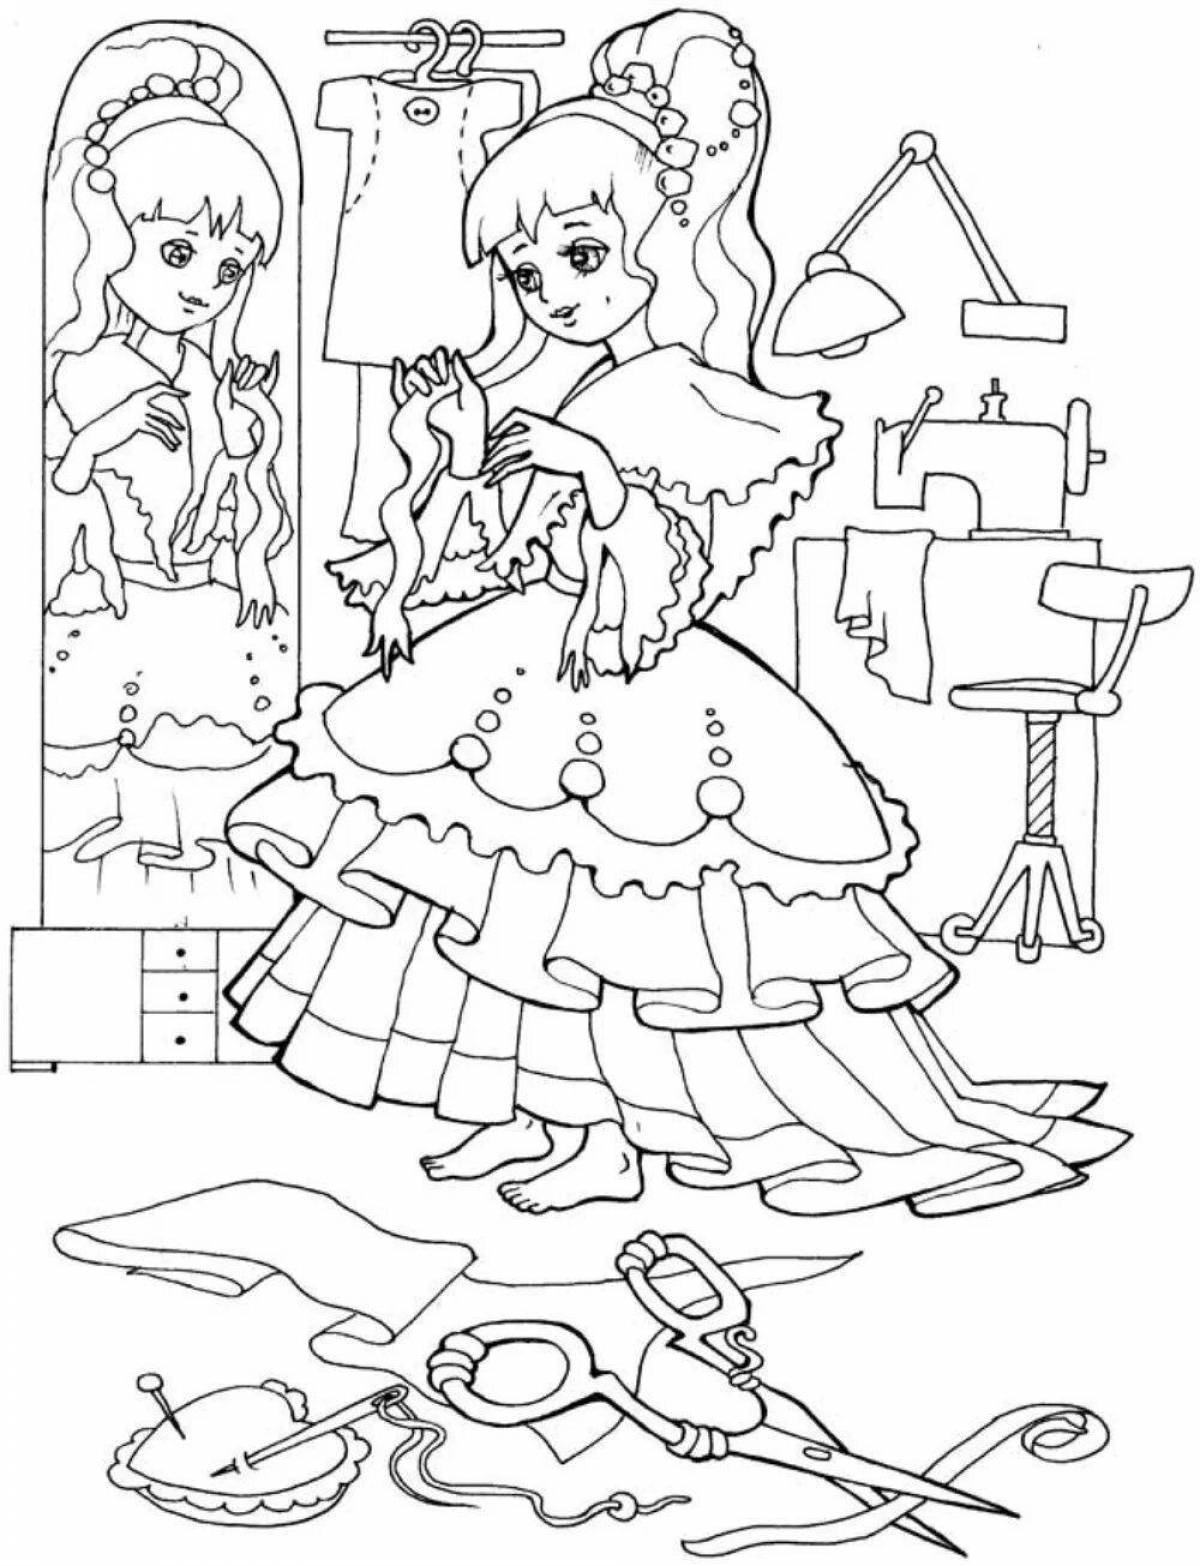 Color-frenzy coloring page для 9-летних девочек